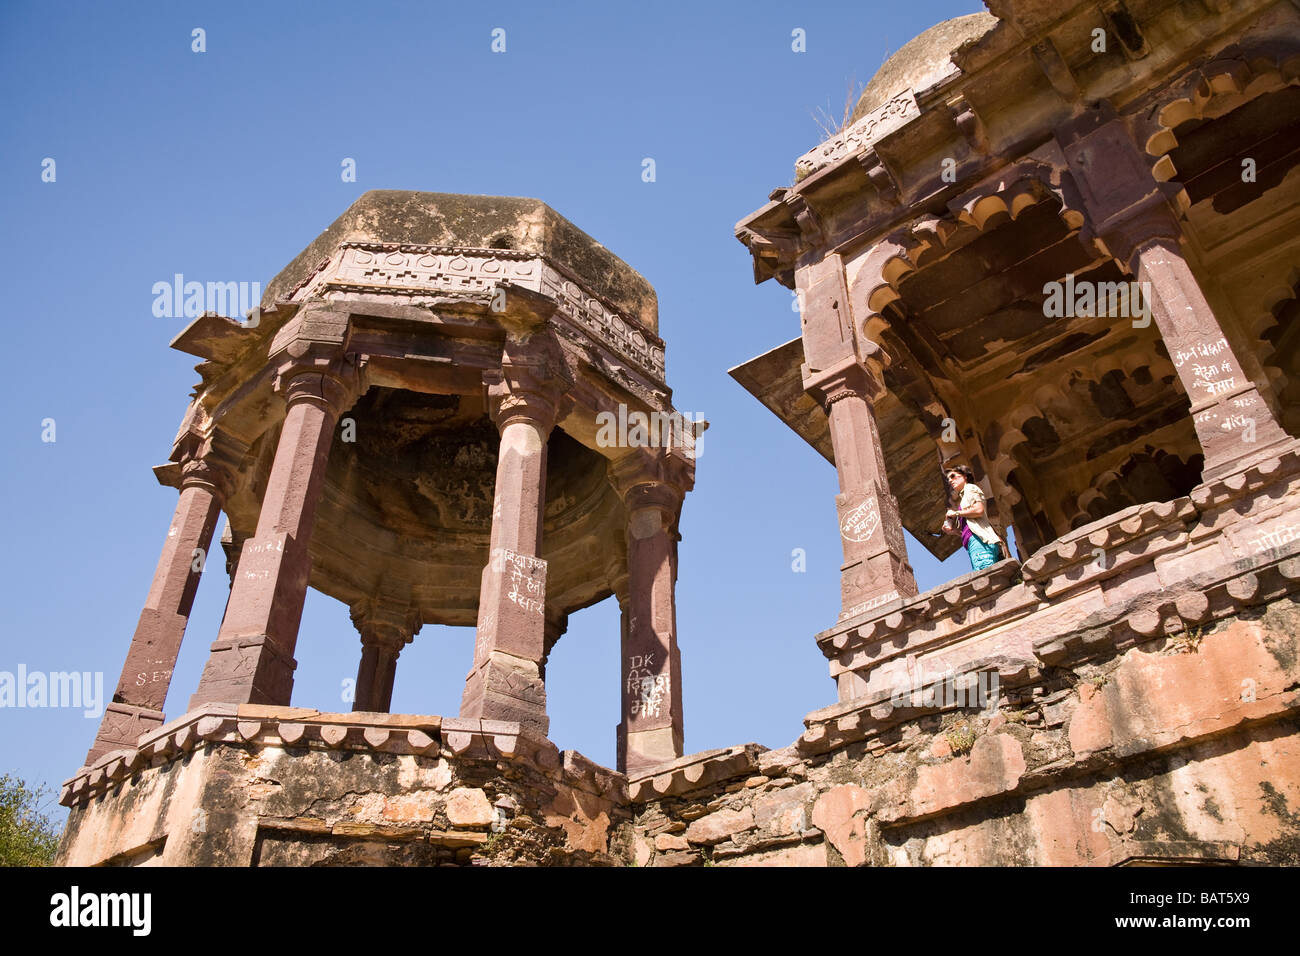 32 Pillared Chhatri in Ranthambhore Fort, Ranthambhore National Park, Rajasthan, India Stock Photo